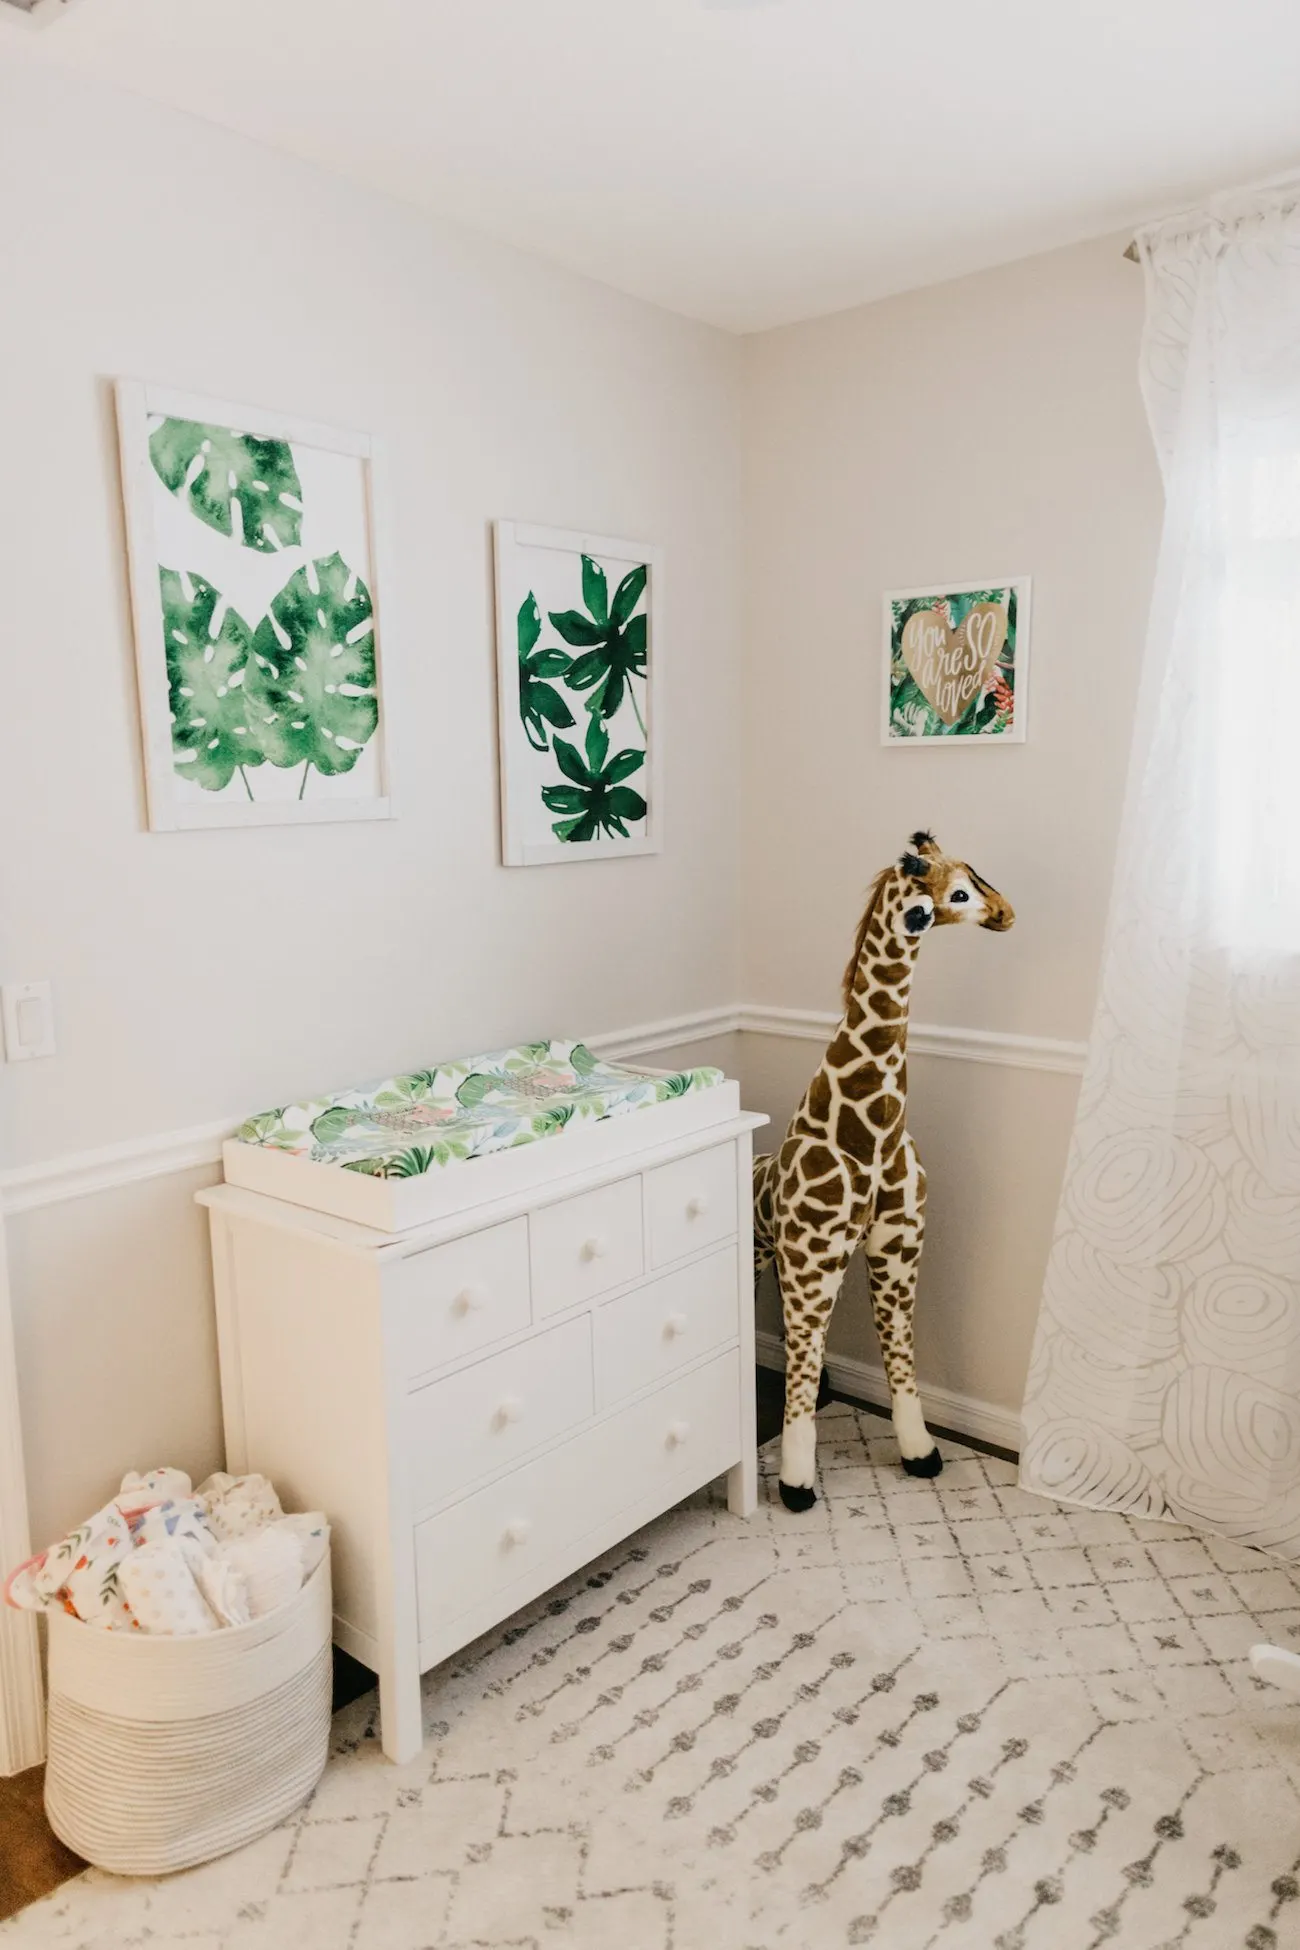 Florida Newborn Photos + Tropical Nursery Tour | Home decor inspiration, entertaining tips, party ideas and more from @cydconverse